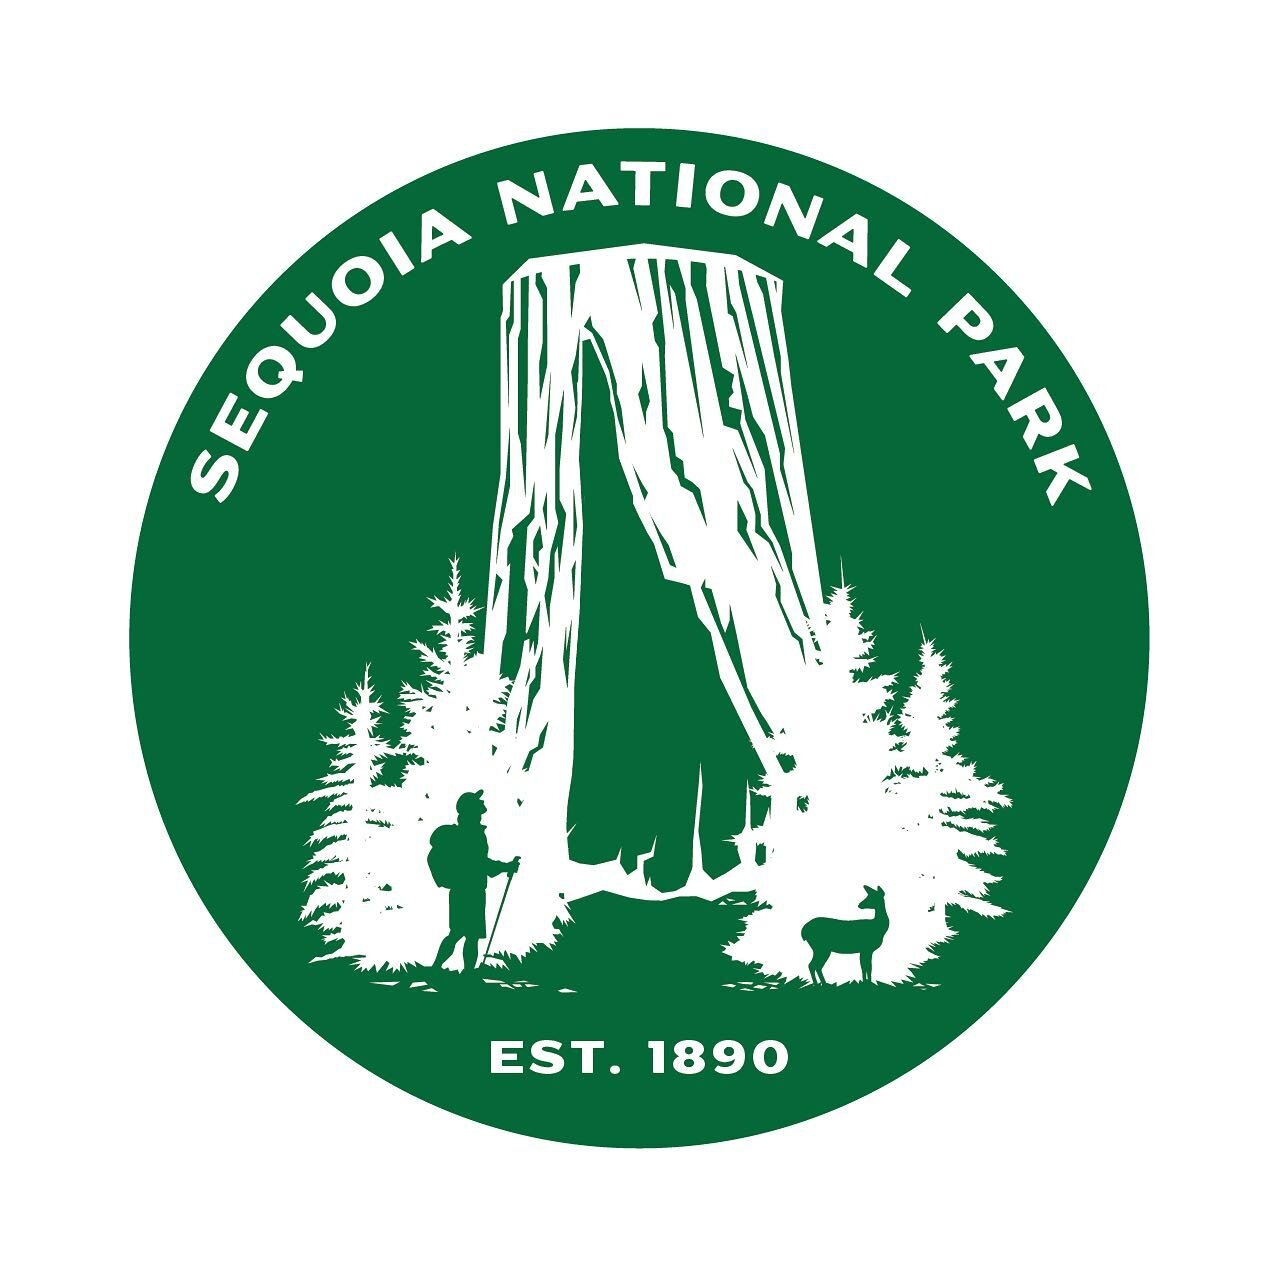 Inspired by our recent visit to @sequoiakingsnps.
.
.
.
.
#illustration
#illustrator
#logo
#logodesign
#badge
#badgedesign
#branding
#brandidentity
#design
#graphicdesign
#nationalpark
#sequoia
#sequoianationalpark